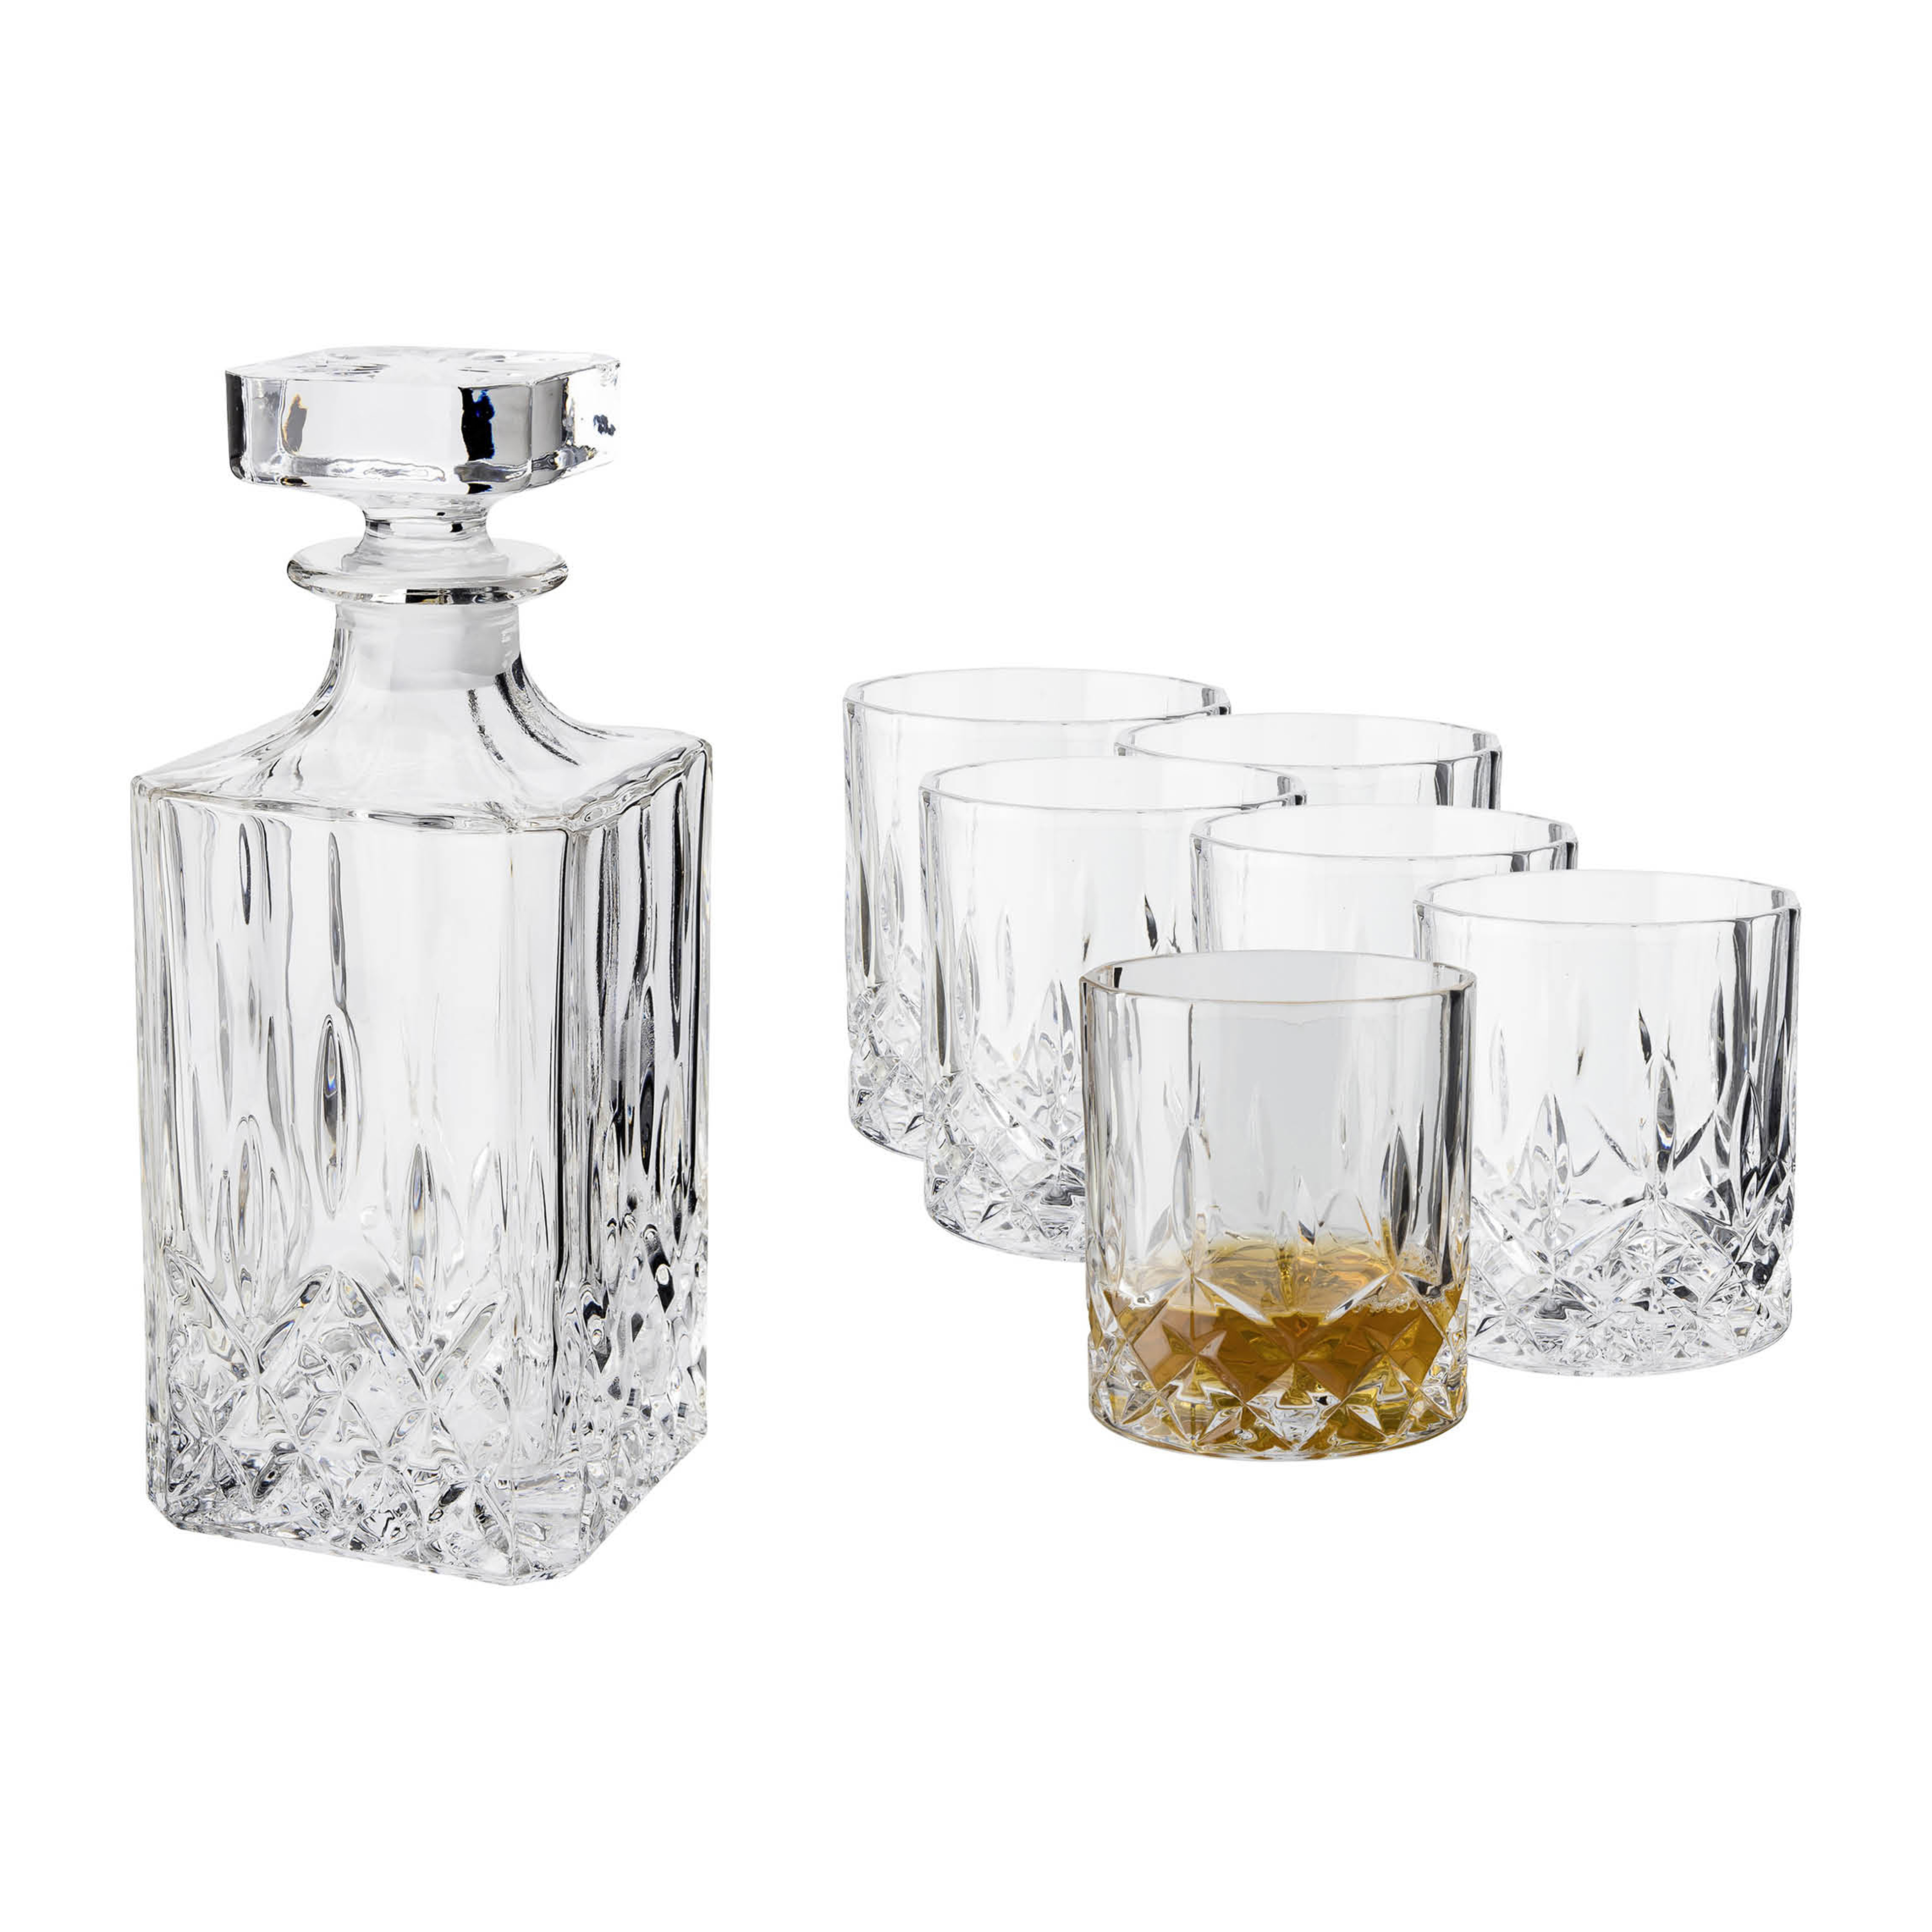 https://www.nordicnest.es/assets/blobs/dorre-set-de-whisky-vide-botella-y-6-vasos-de-whisky-cristal/505974-01_1_ProductImageMain-2936cb1eba.jpg